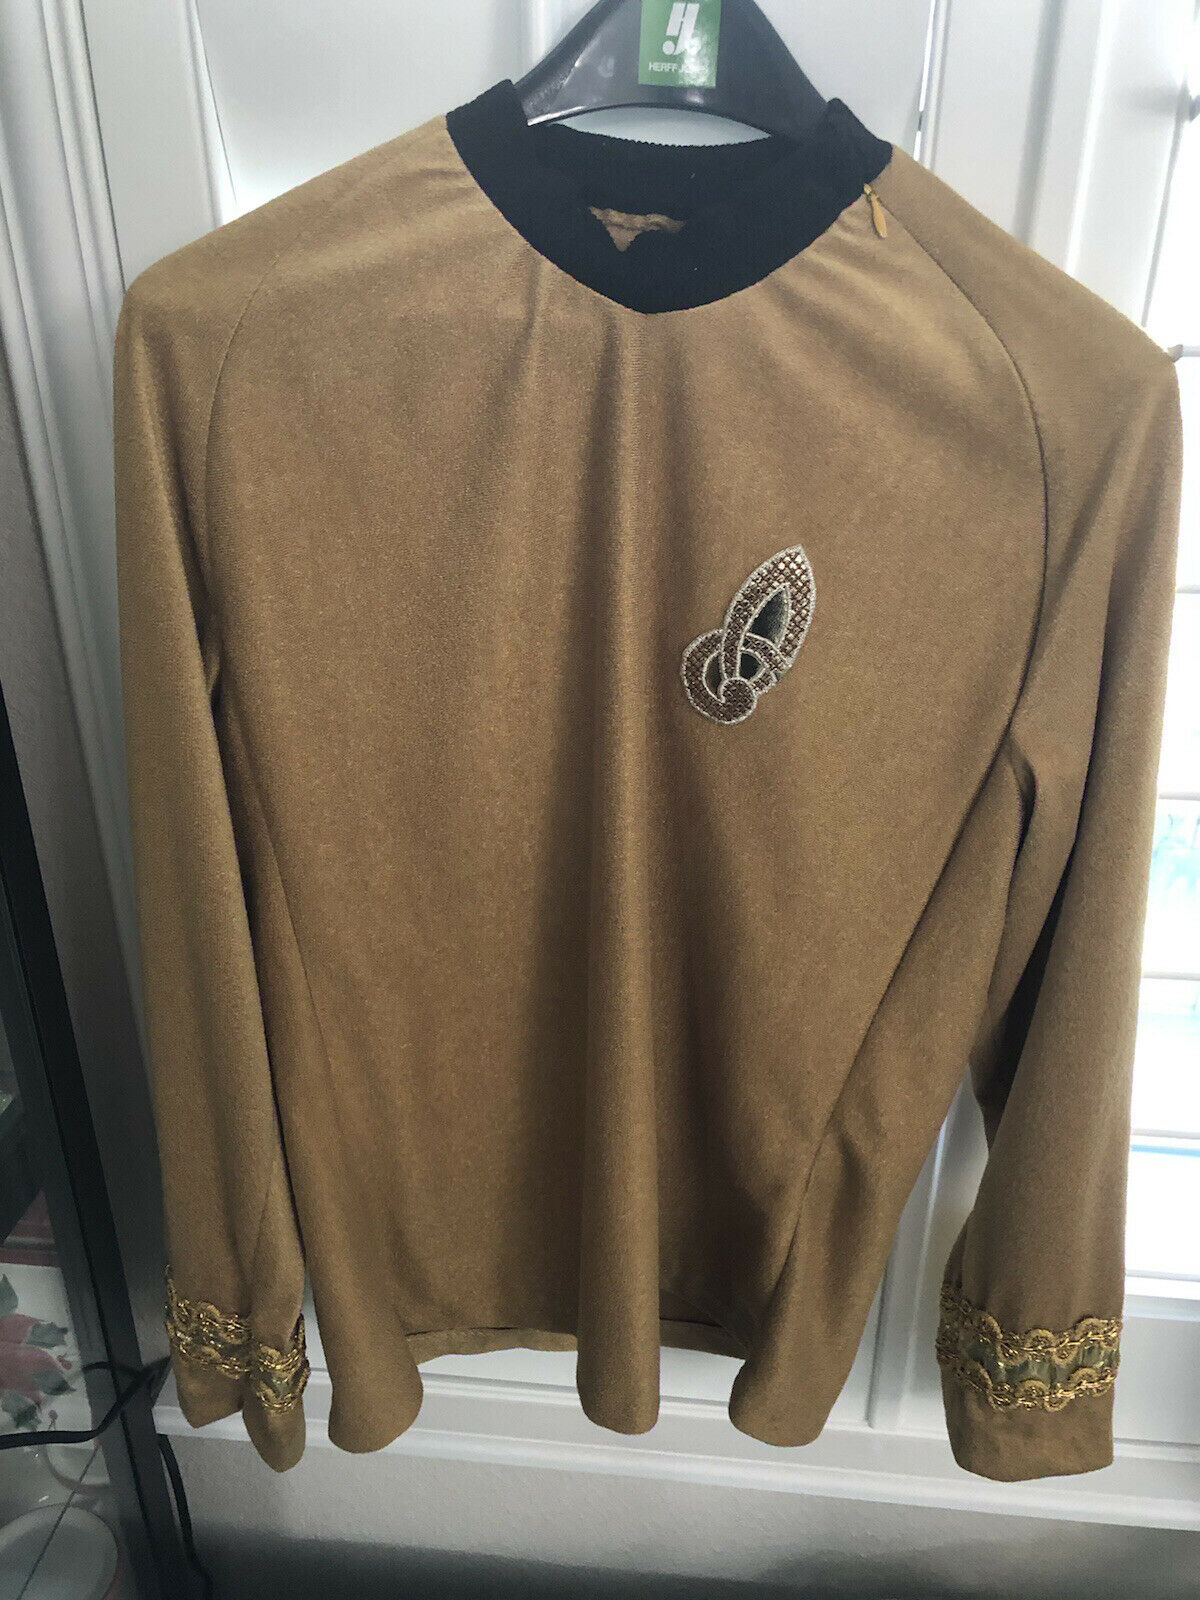 Star Trek Tos Commodore  Decker Uniform Tunic Reproduction -rare Gold Material